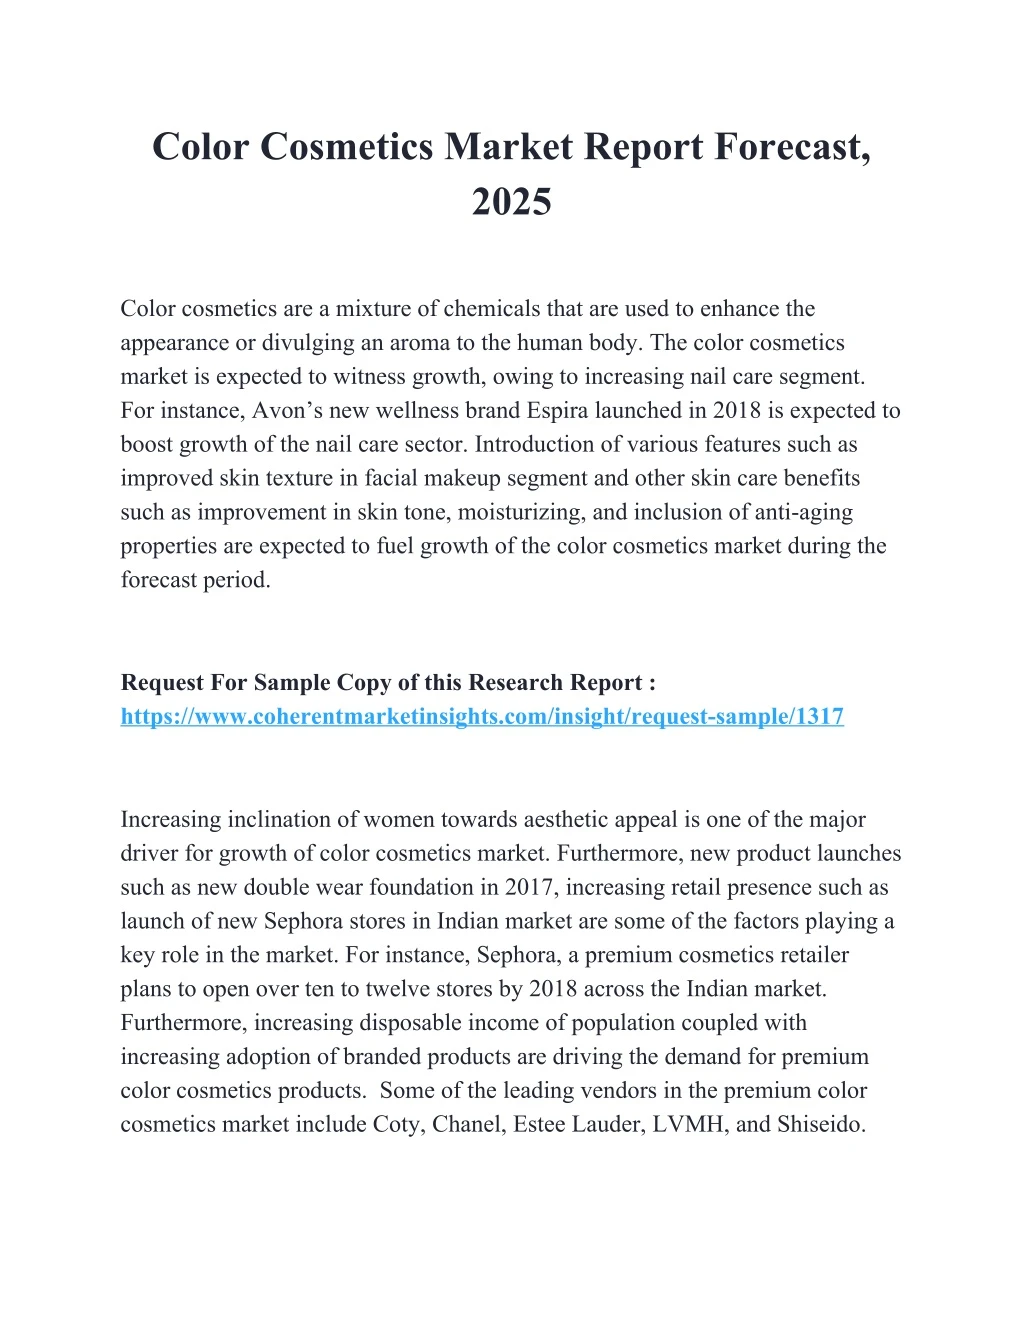 color cosmetics market report forecast 2025